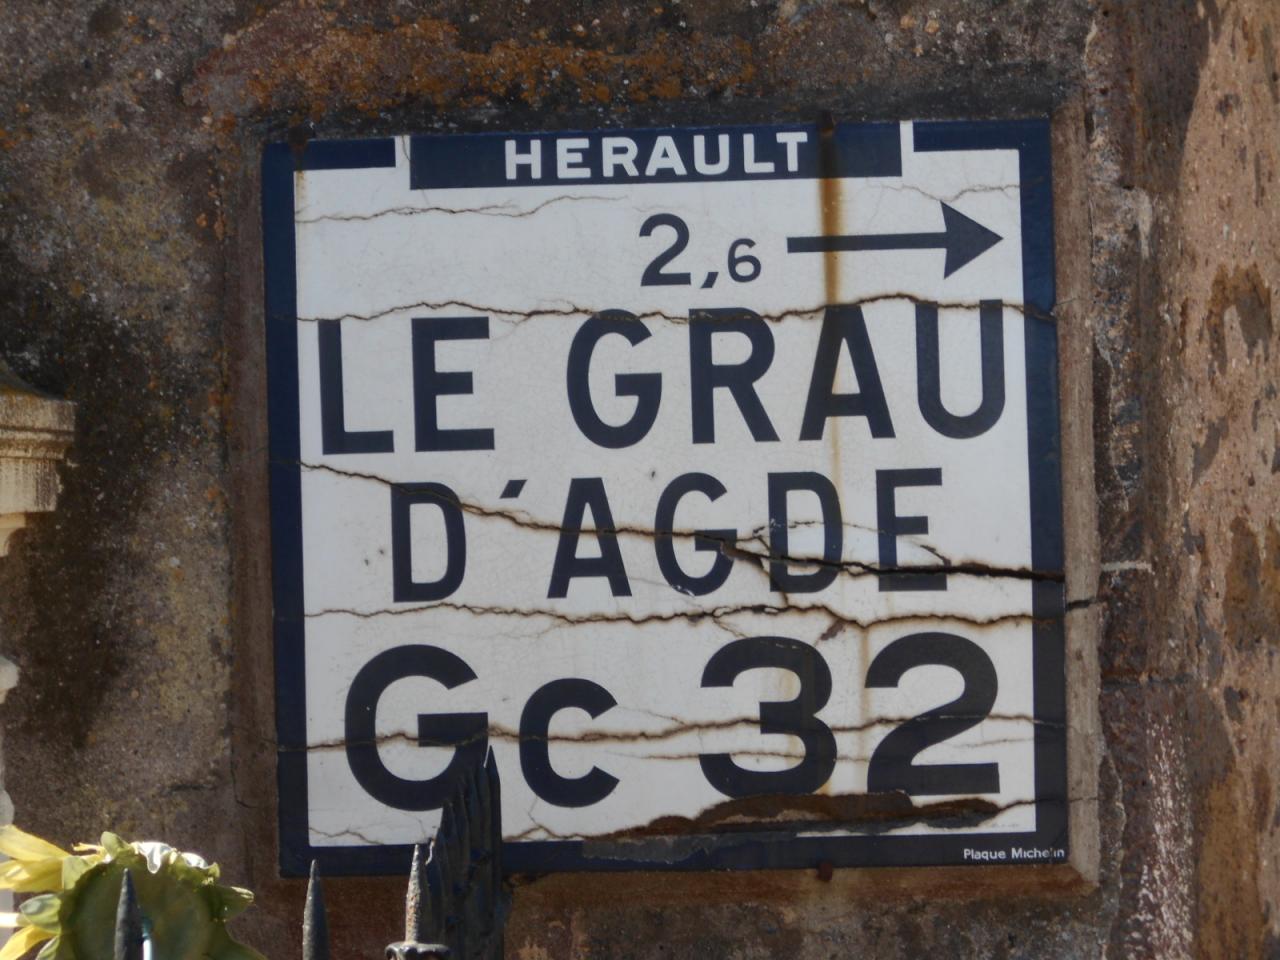 34300 Le Grau d'Agde (3)